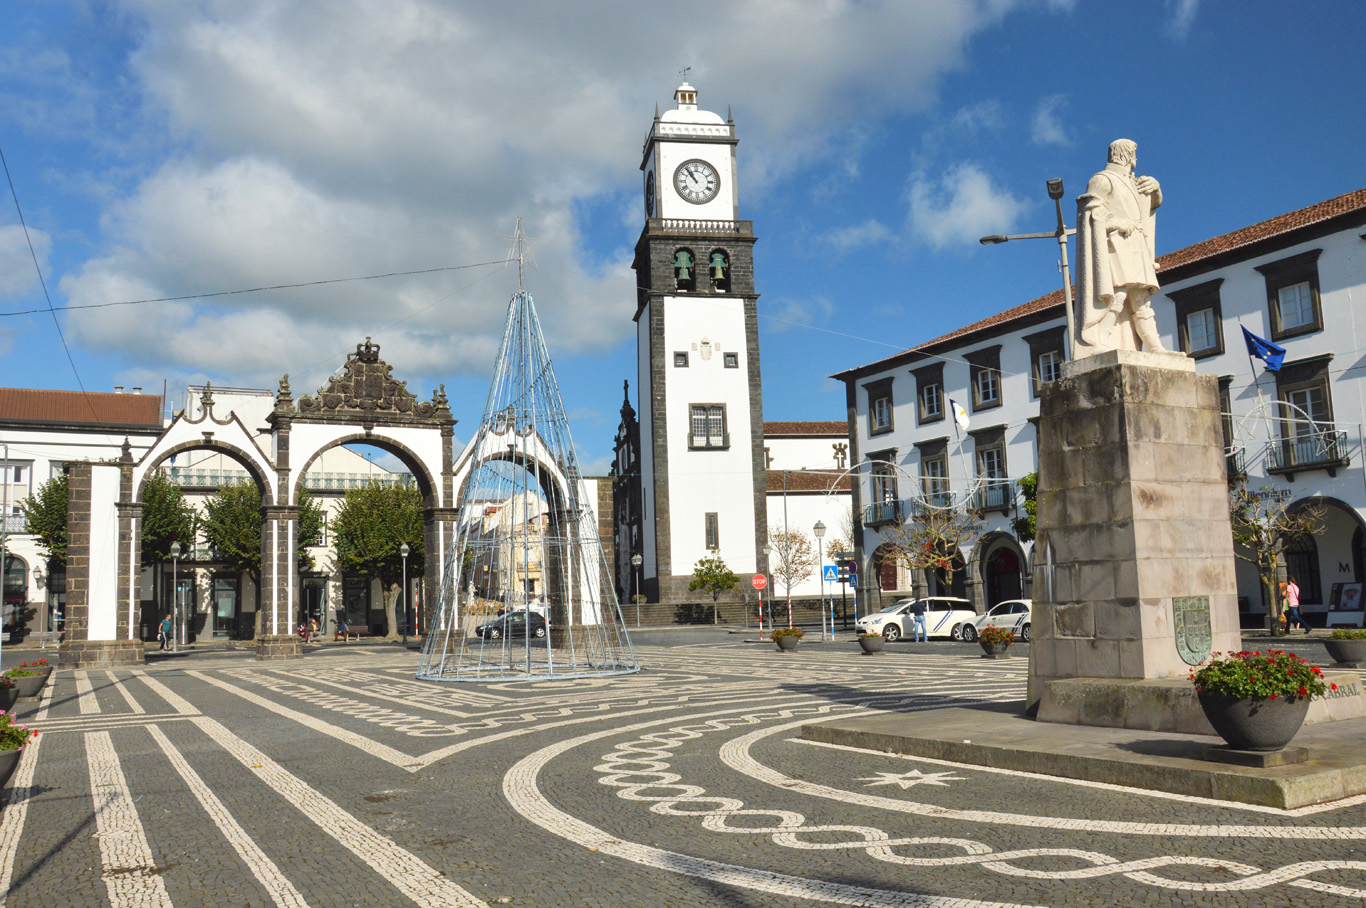 Praça de Gonçalo Velho - the City Gate and the Church of St. Sebastian